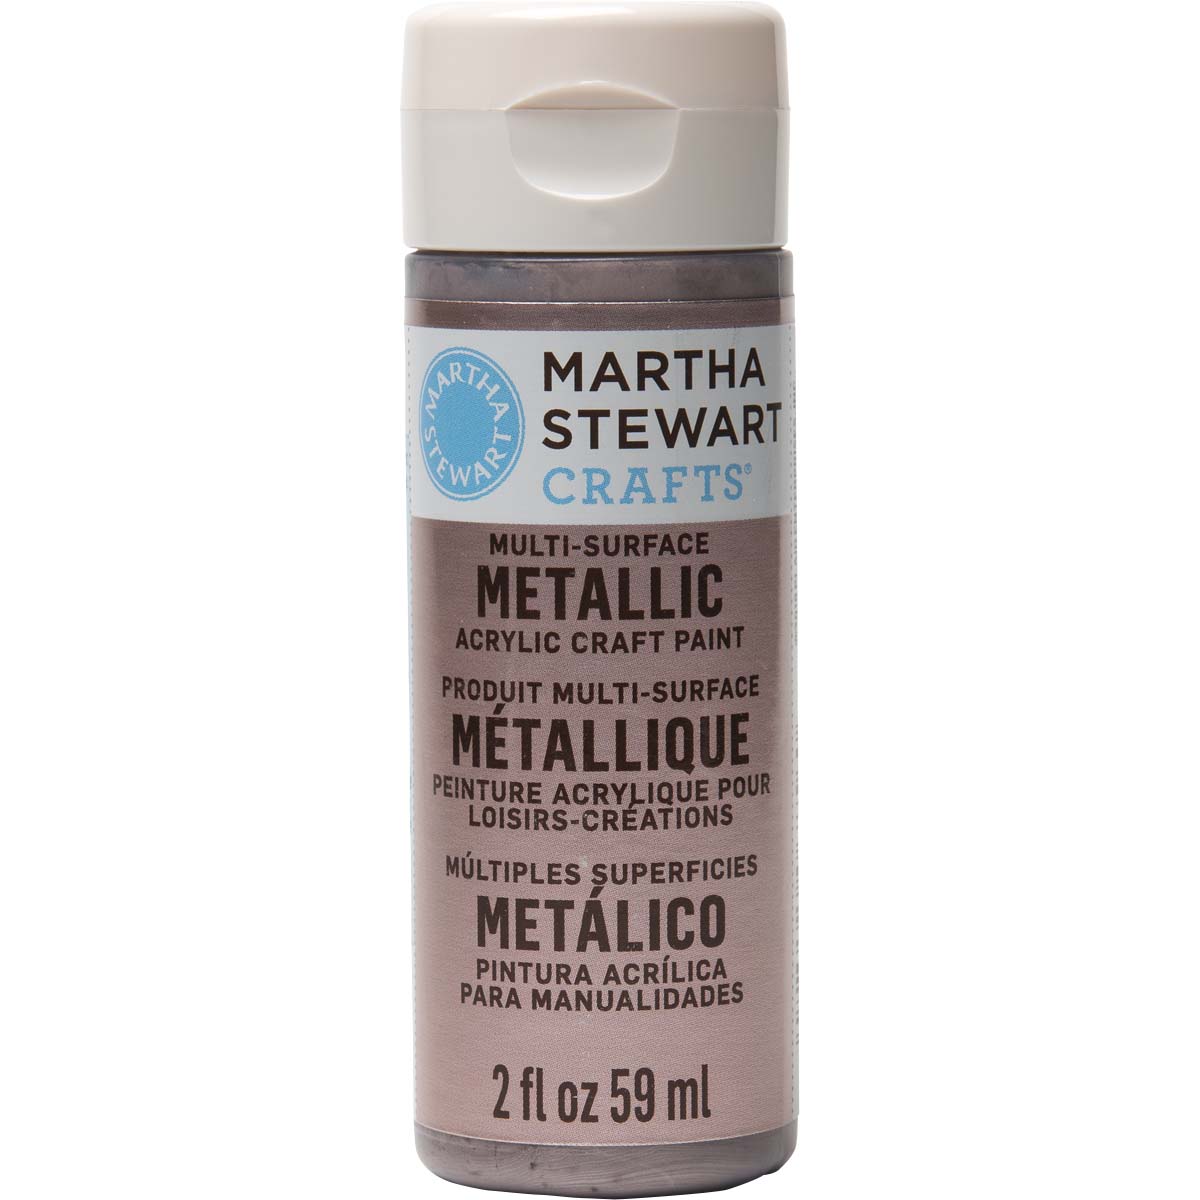 Martha Stewart ® Multi-Surface Metallic Acrylic Craft Paint - Rose Chrome, 2 oz. - 32995CA